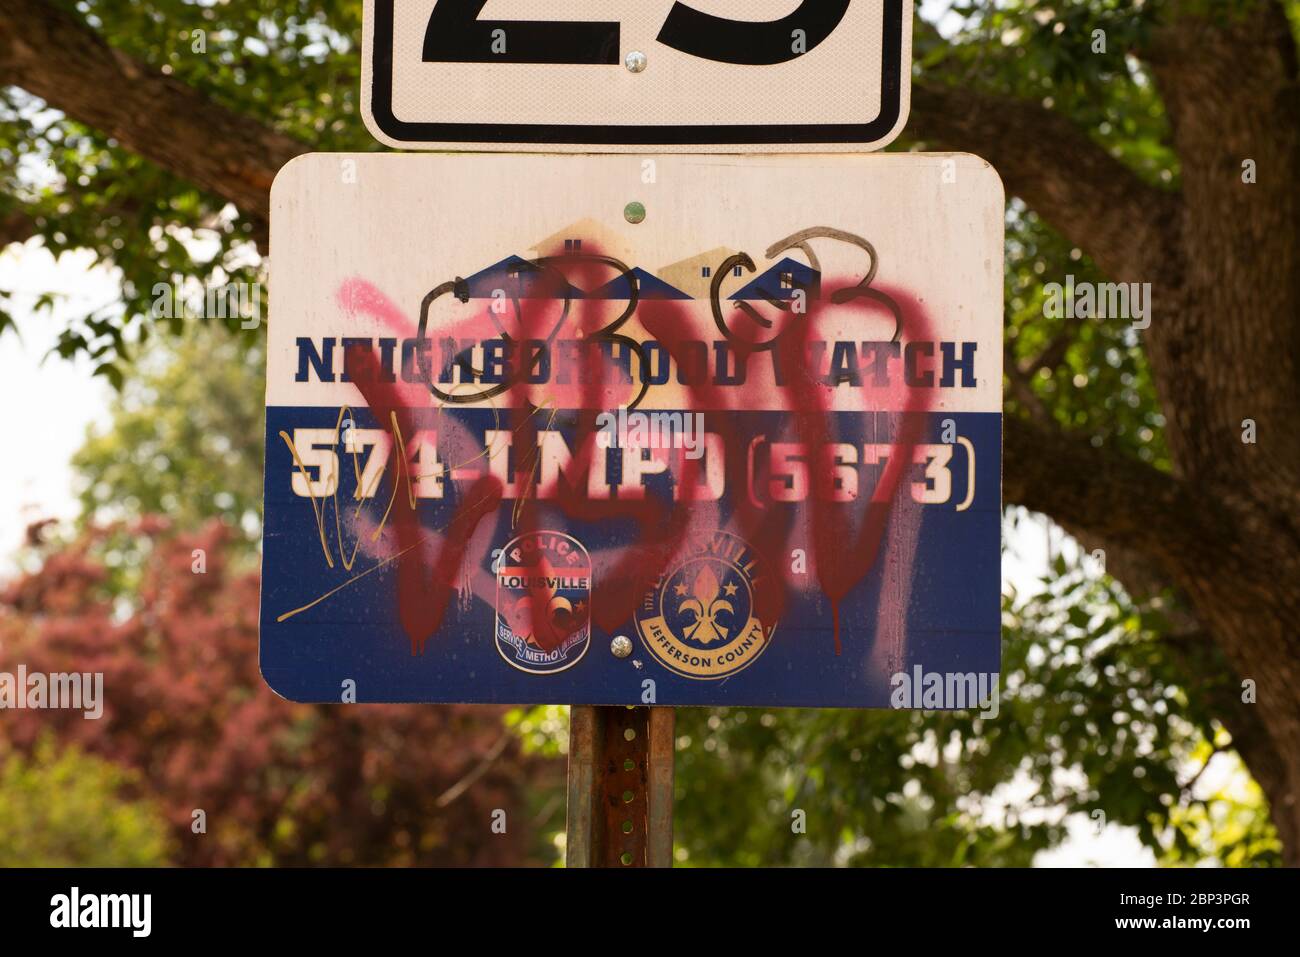 Graffiti covers a Neighborhood Watch sign in Louisville, Kentucky. Stock Photo